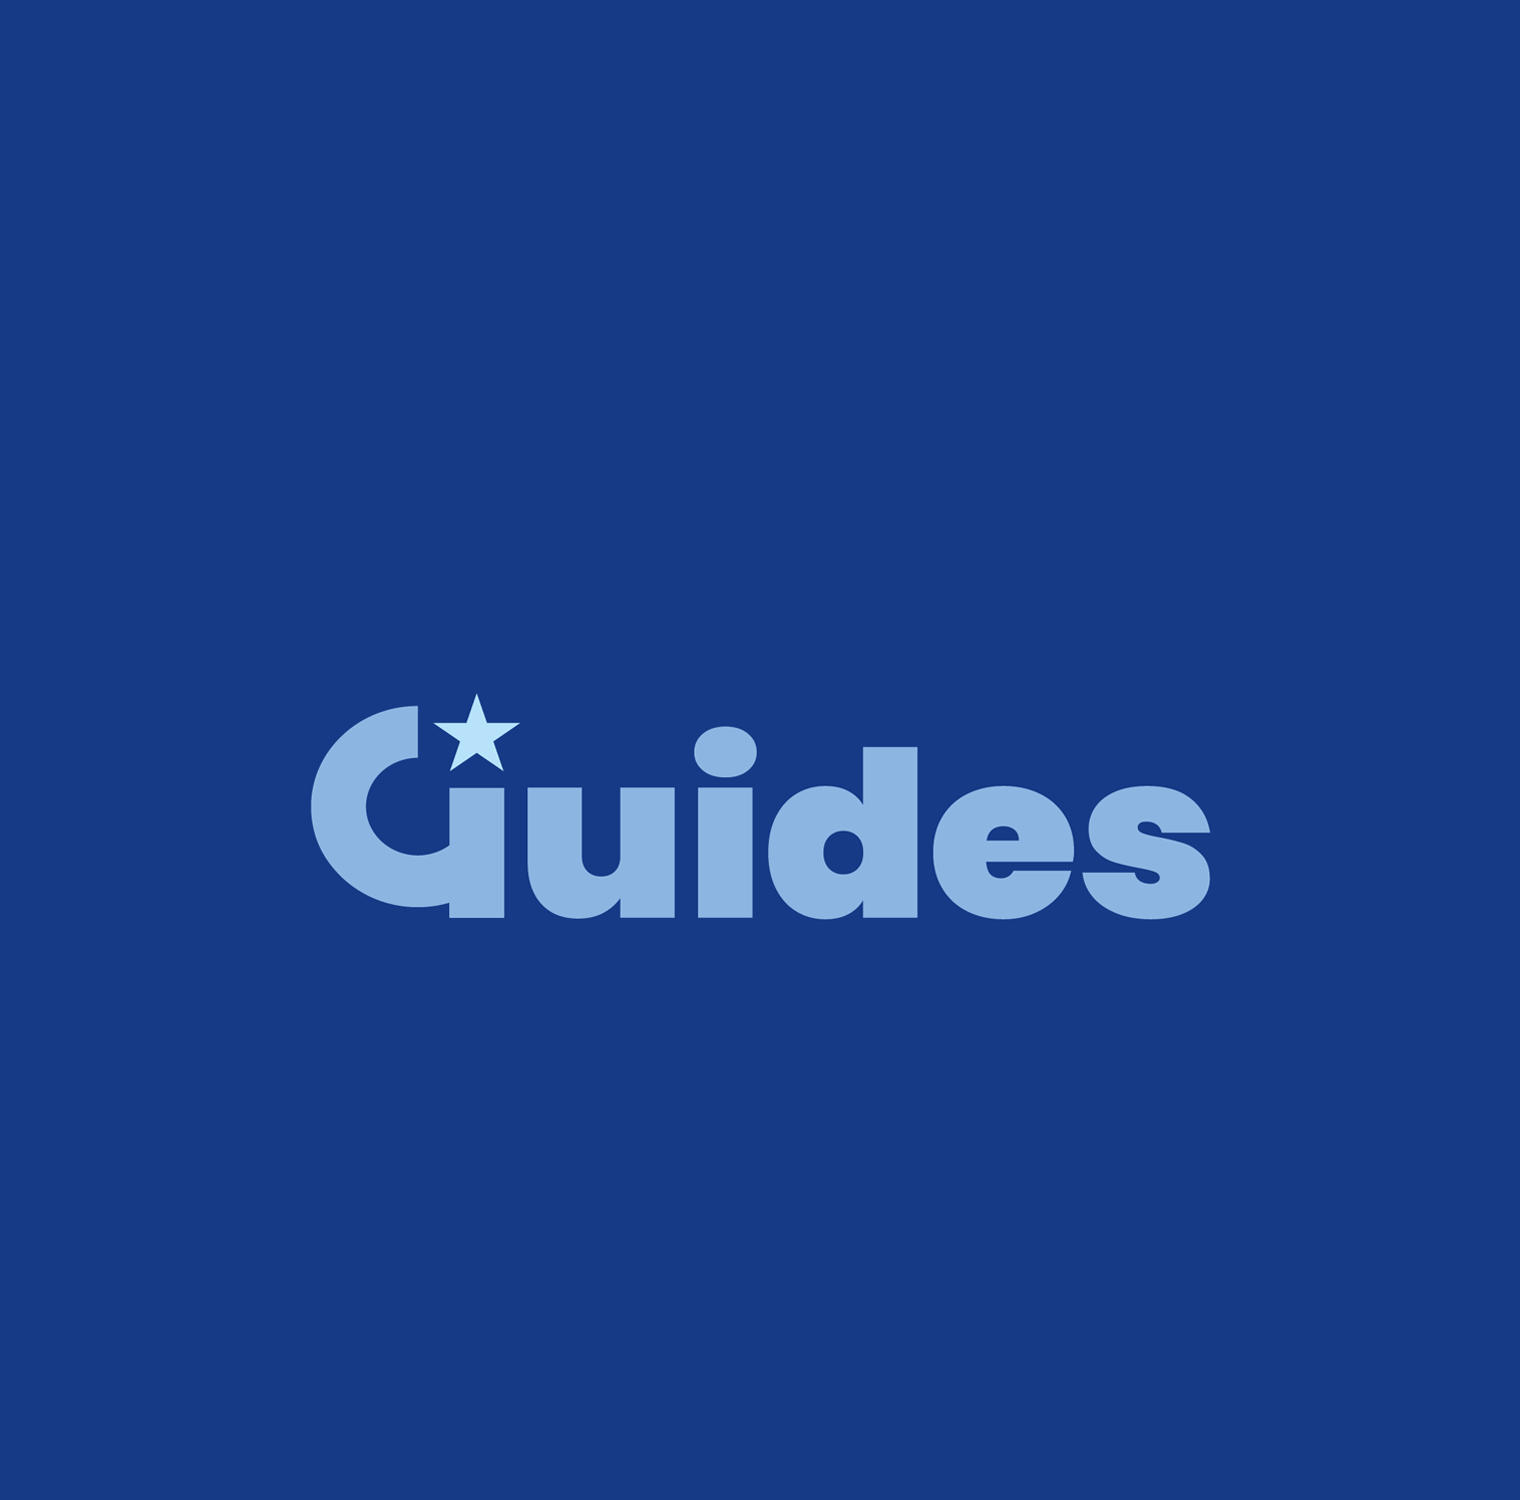 Guides written in mid blue on dark blue background